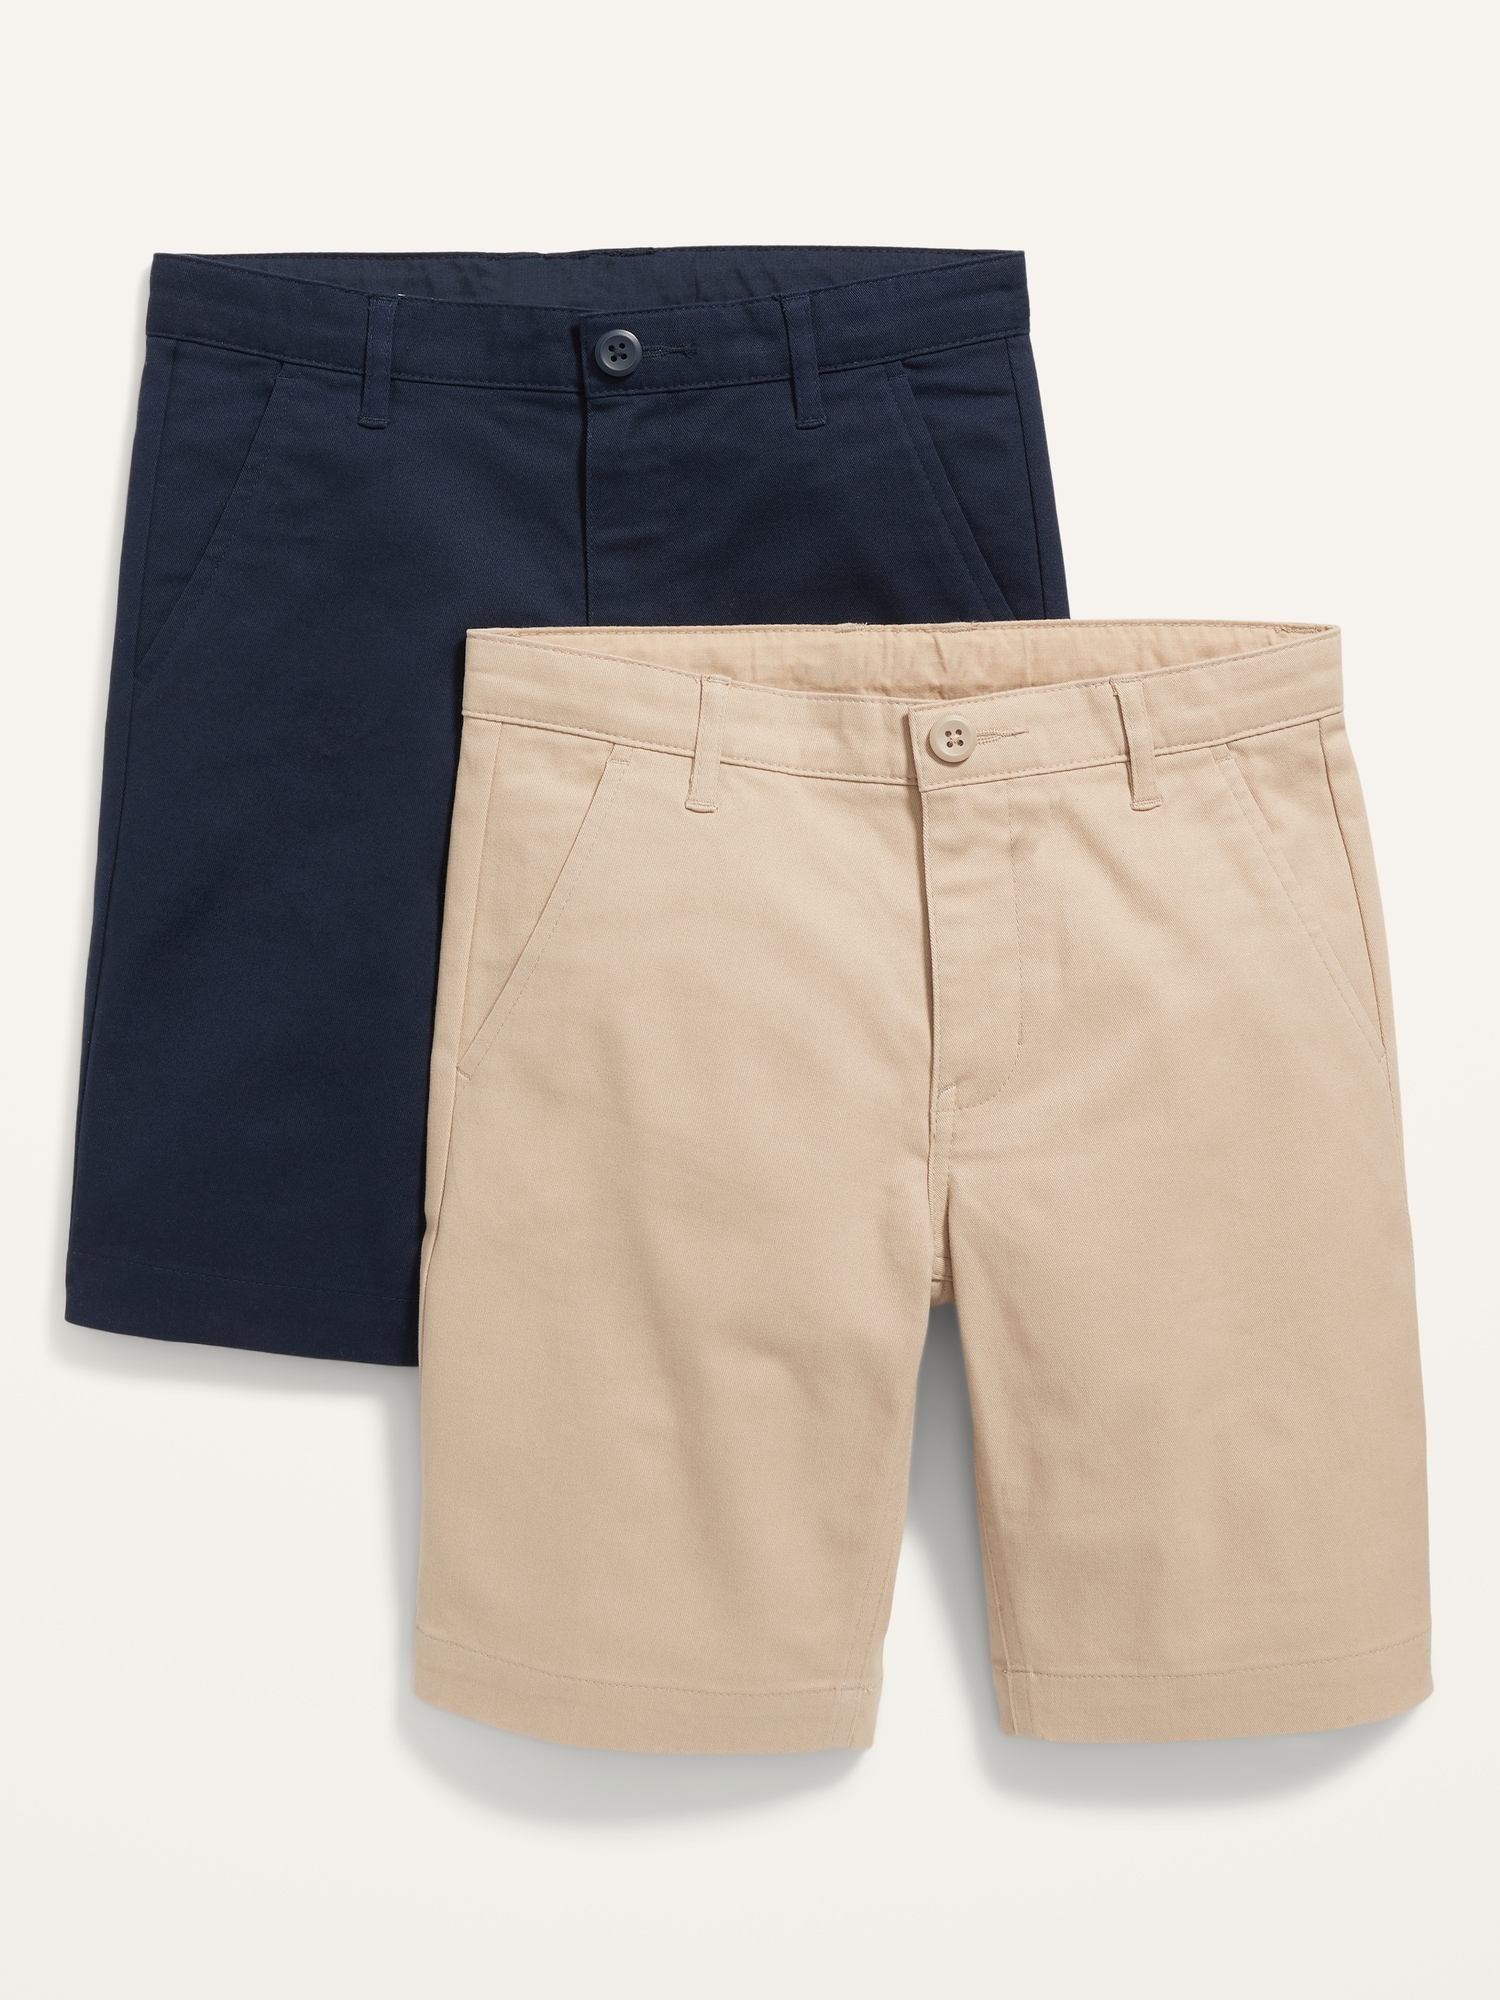 Knee Length Straight Uniform Shorts 2-Pack for Boys